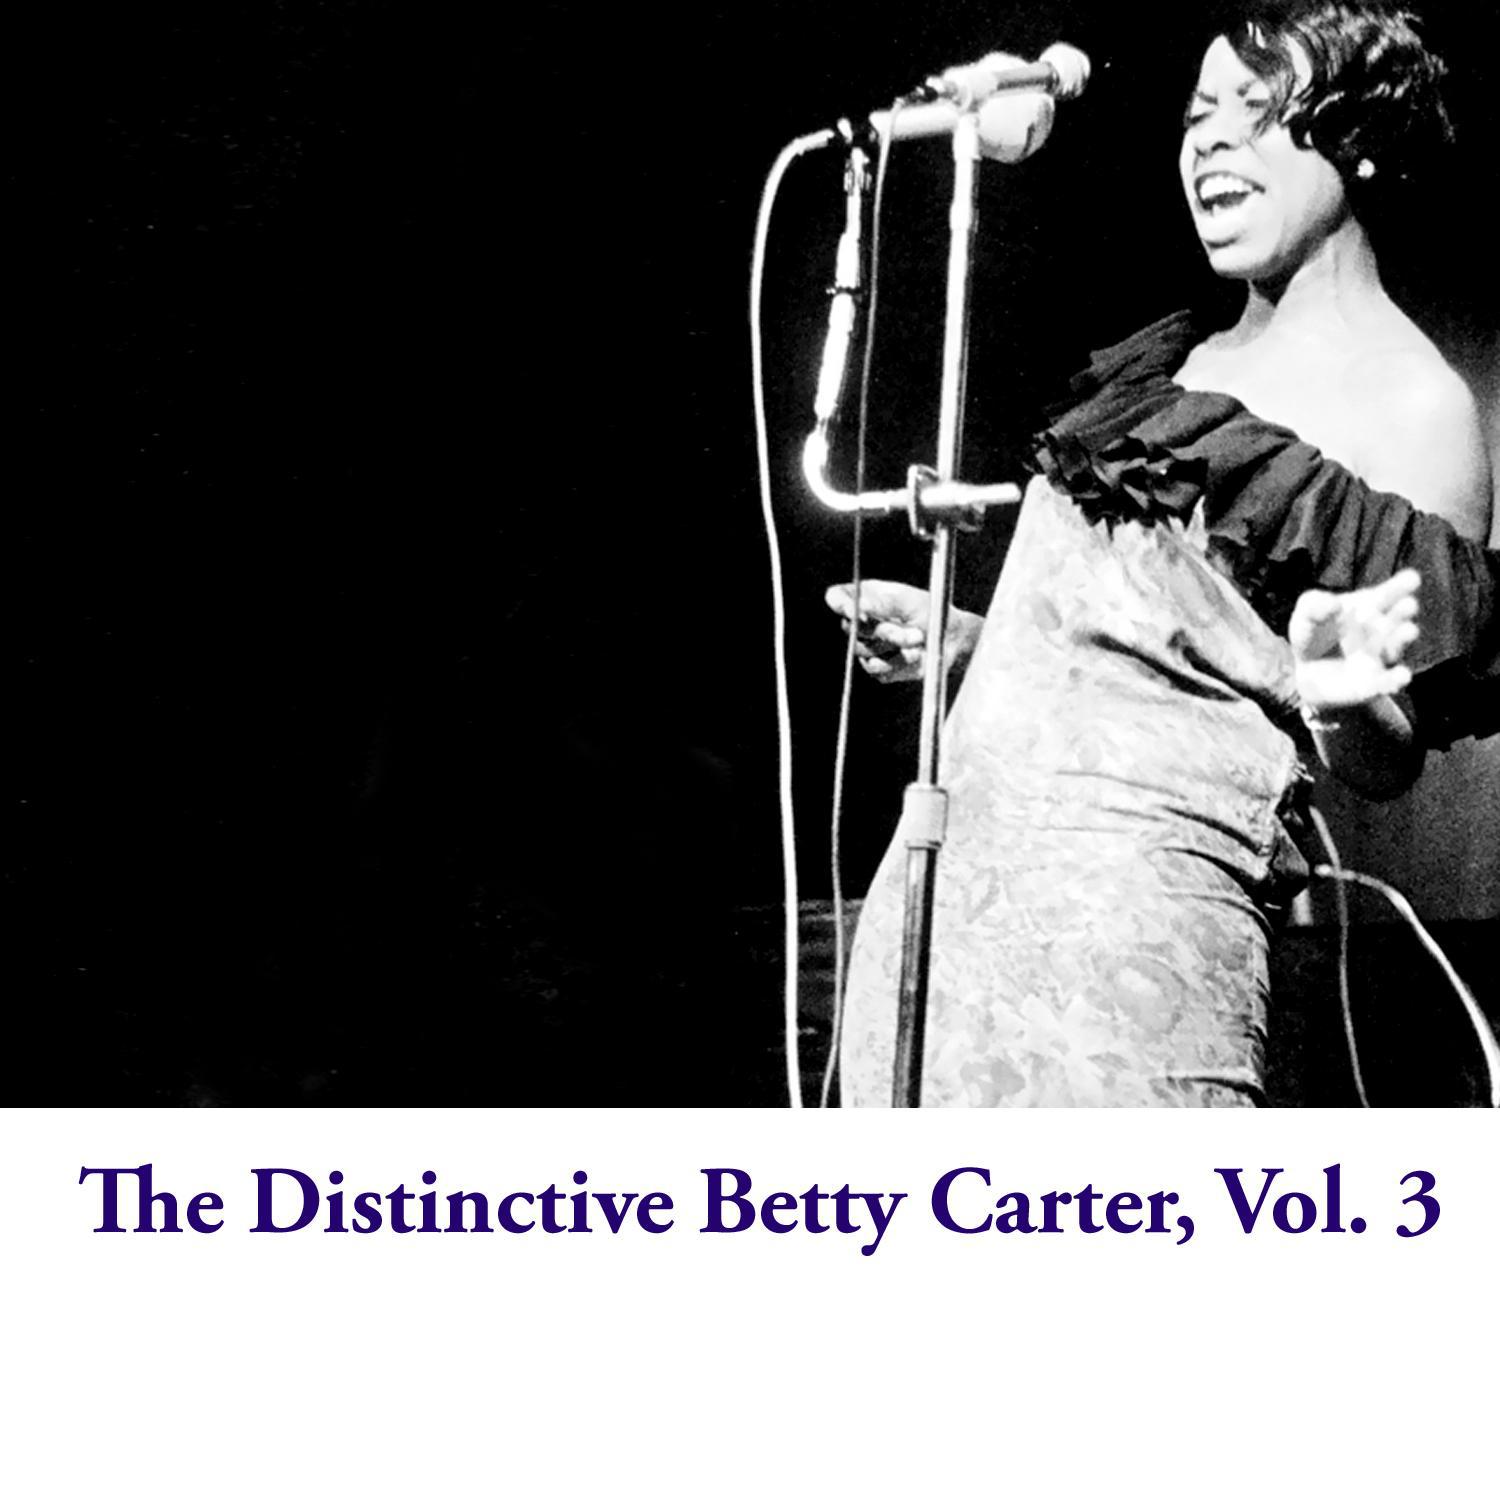 The Distinctive Betty Carter, Vol. 3